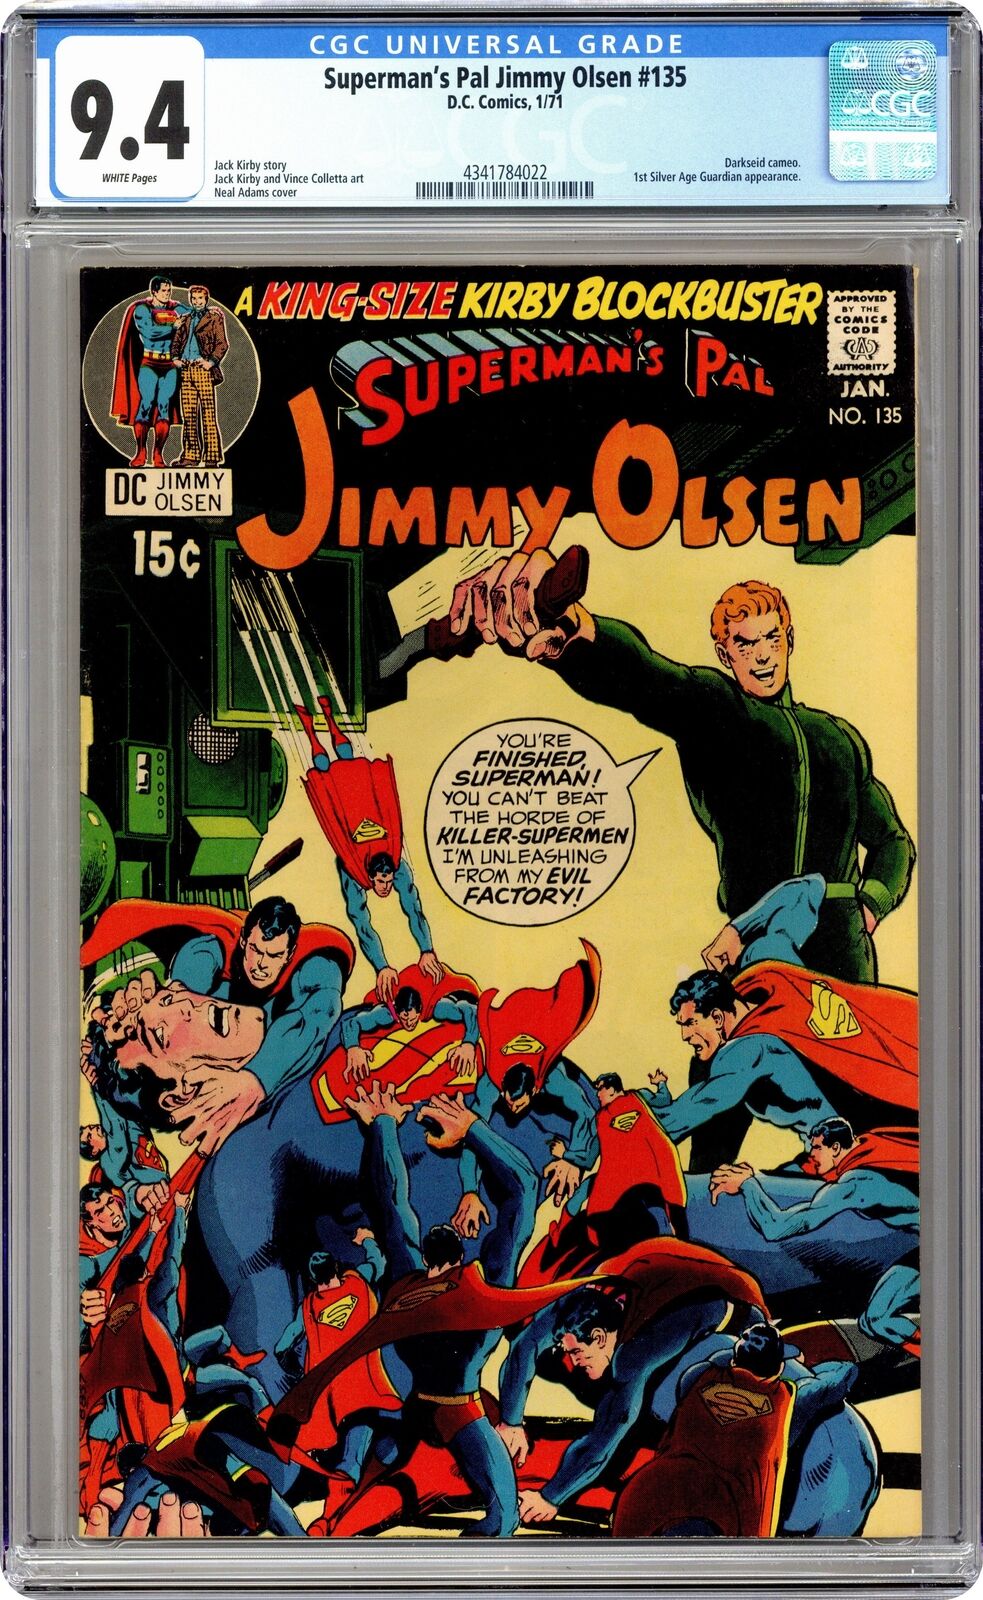 Superman's Pal Jimmy Olsen #135 CGC 9.4 1971 4341784022